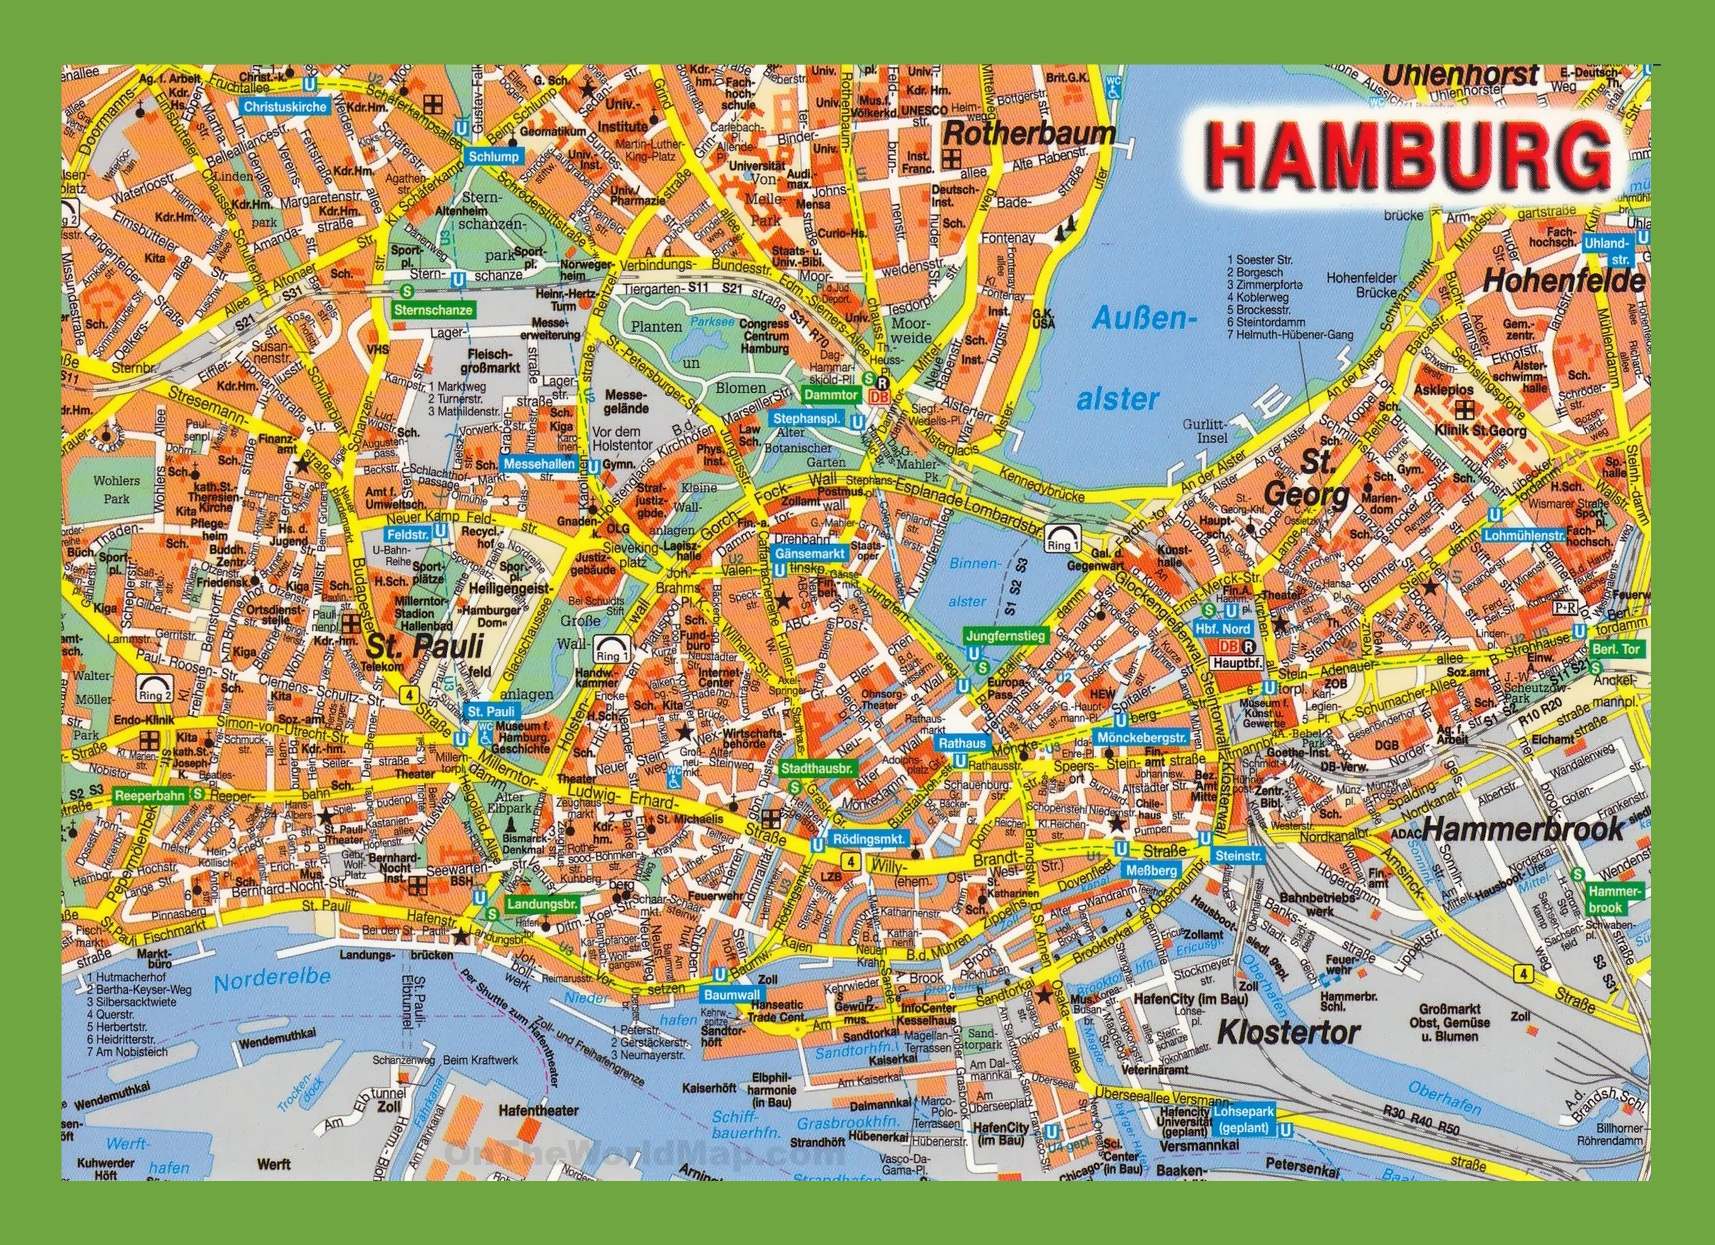 hamburg tourist attractions map